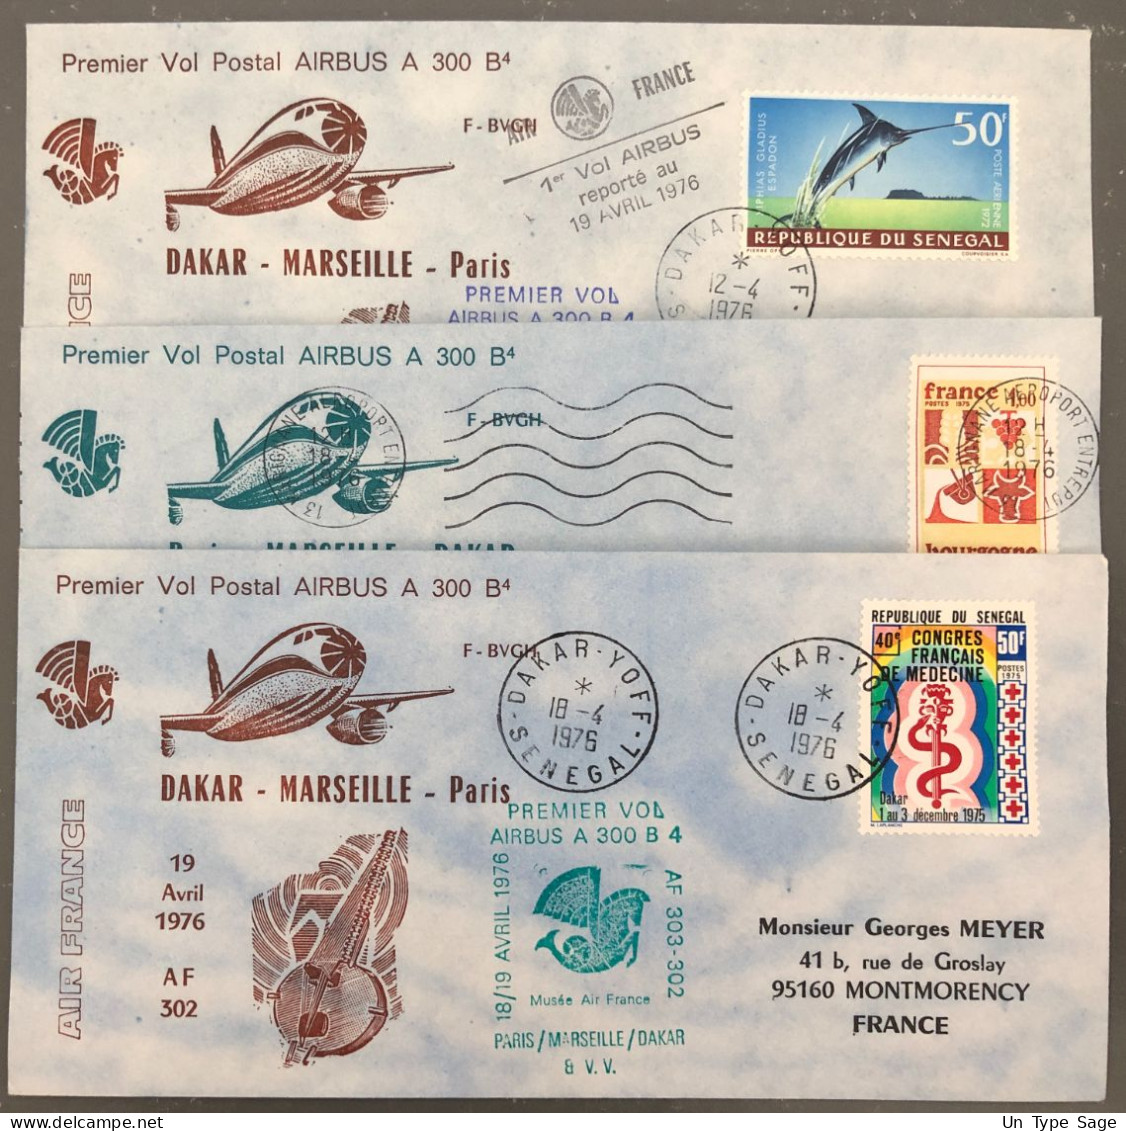 France, Premier Vol (Air France) Paris, Marseille, Dakar, 19.4.1976 - 3 Enveloppes - (B1499) - Primeros Vuelos